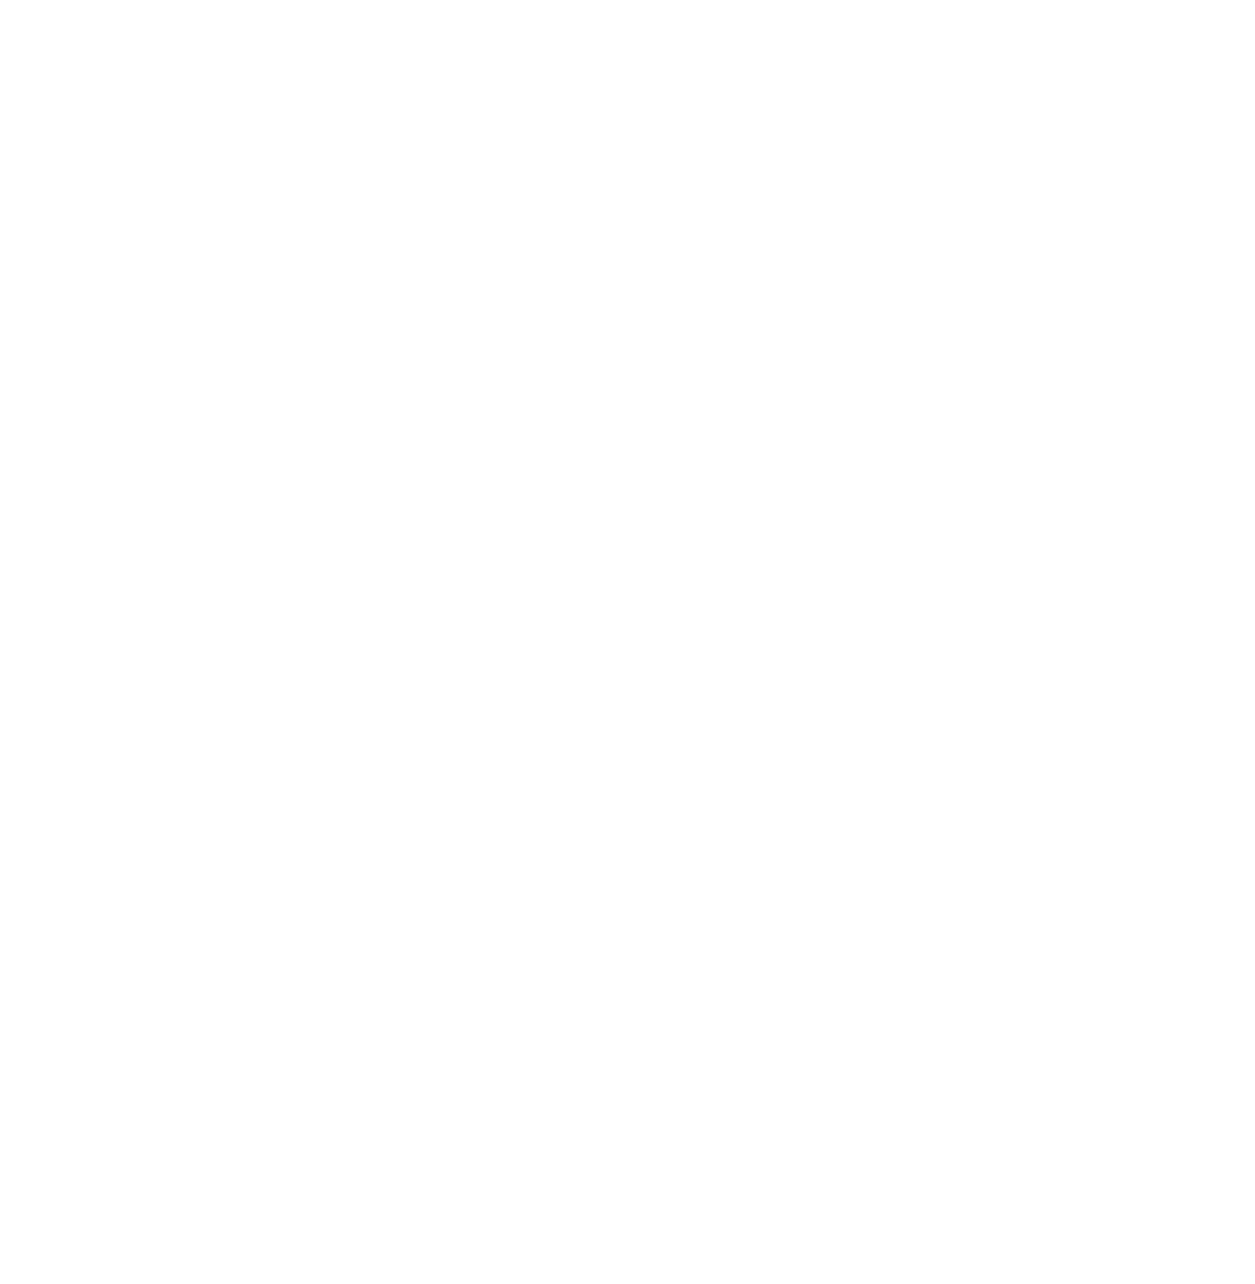 Wilderness Hotels & Safaris, Ivalo